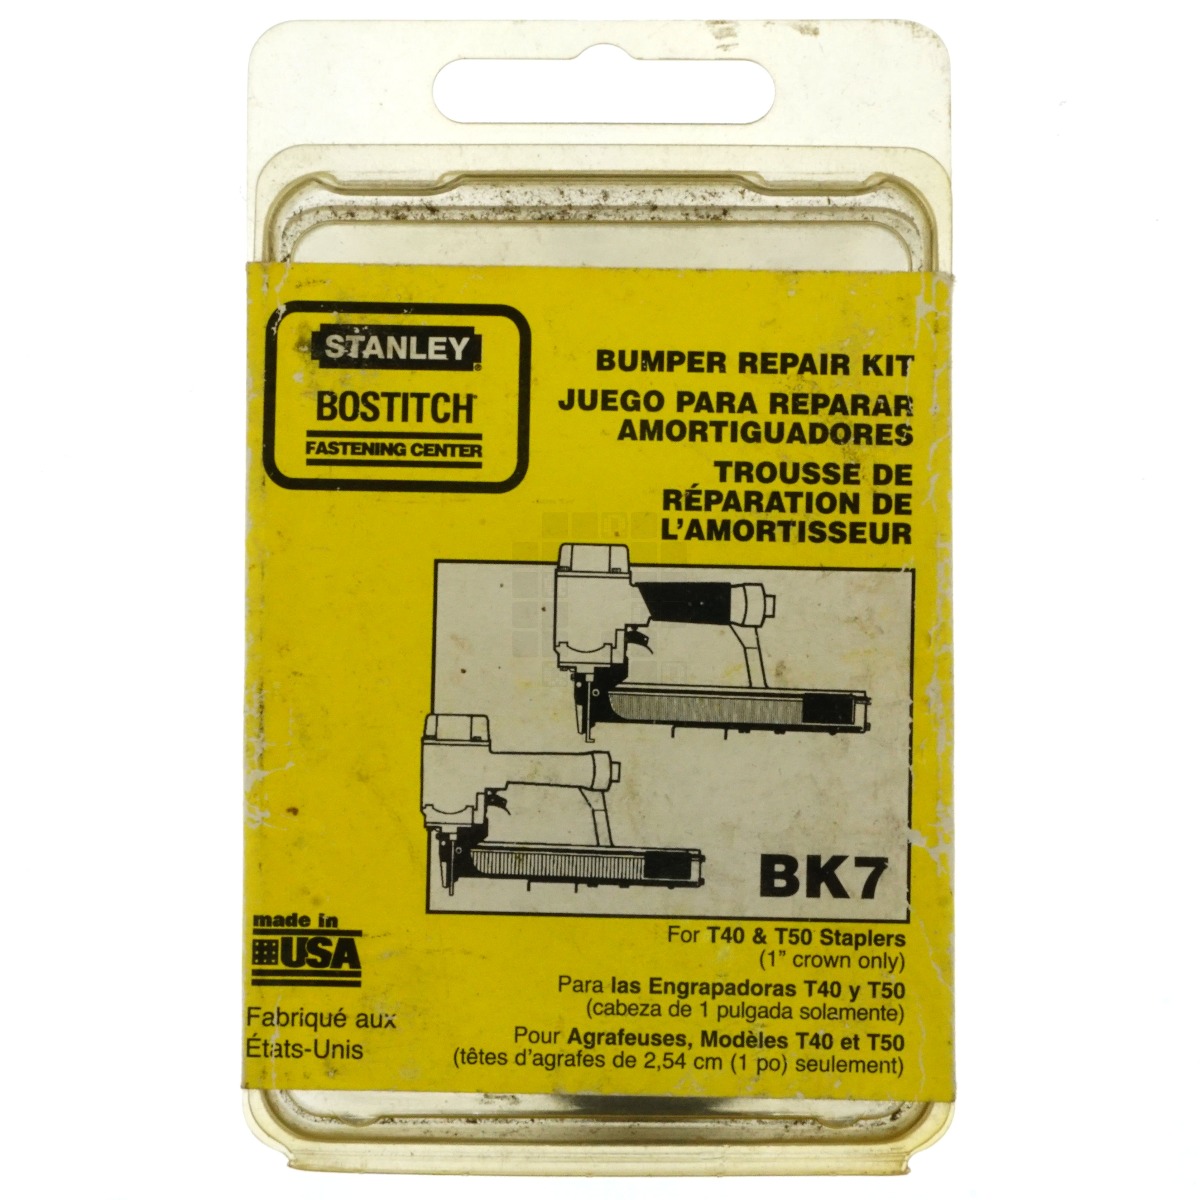 Stanley Bostitch BK7 Bumper Repair Kit